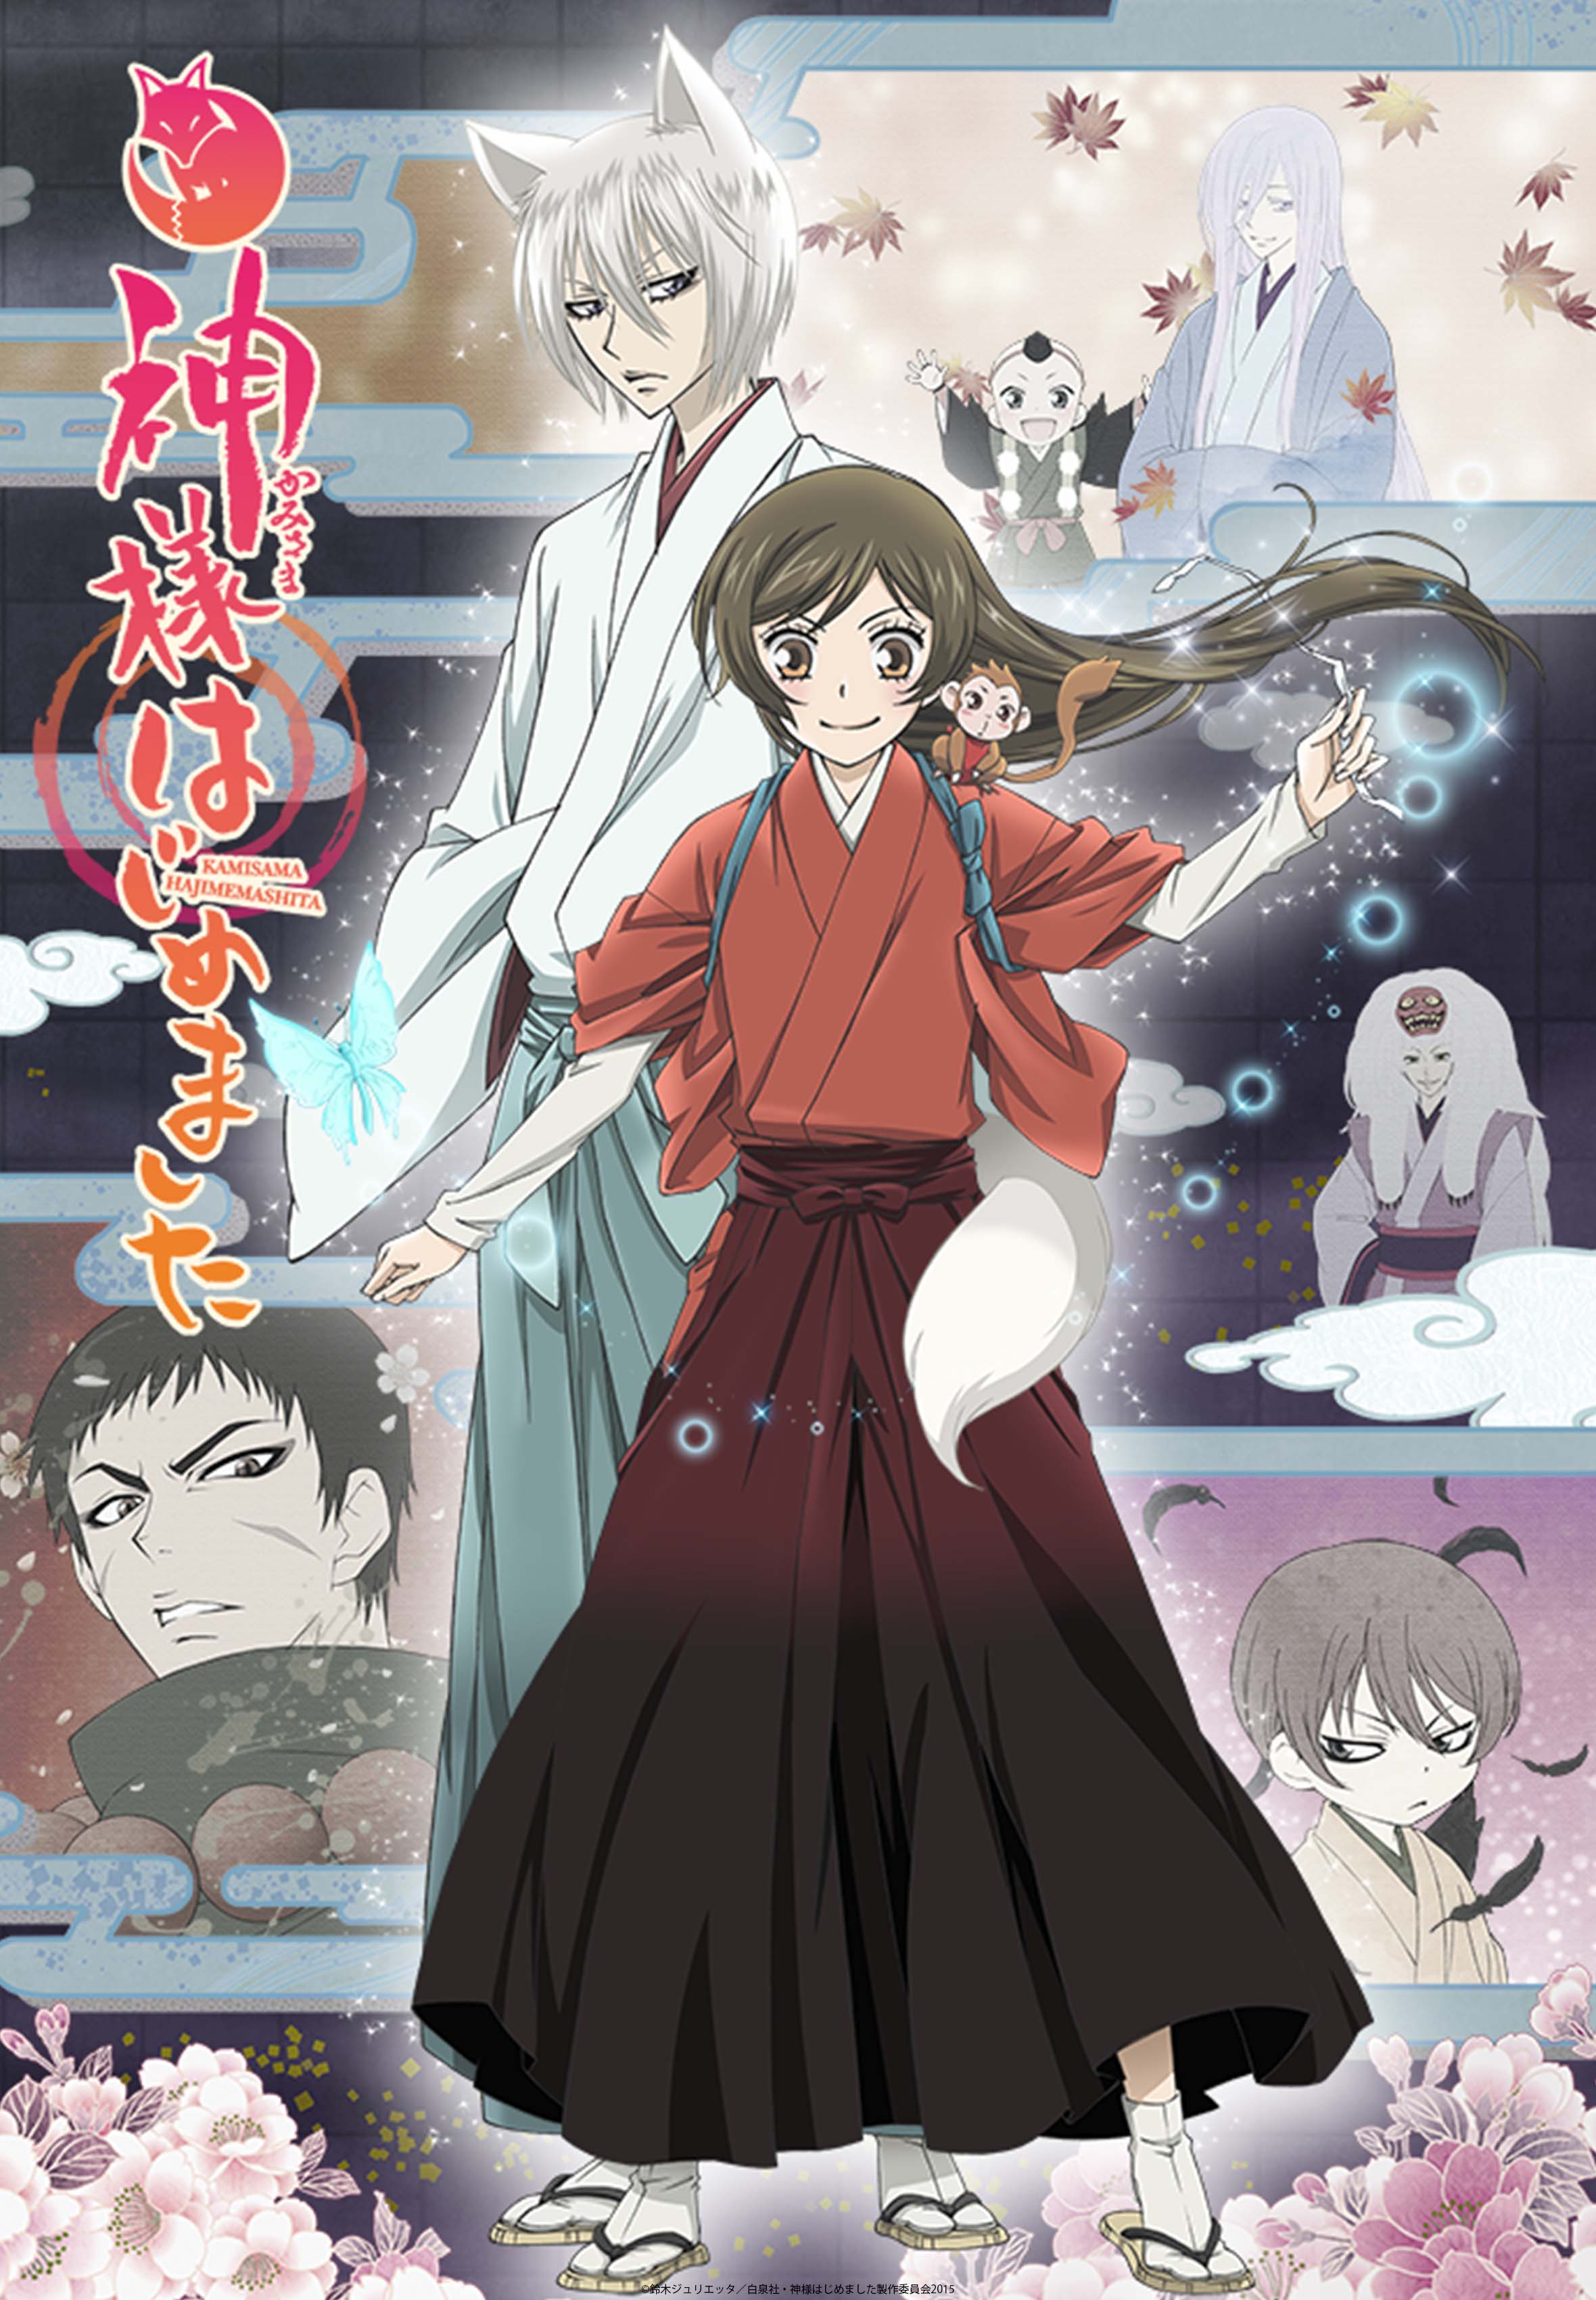 Dreamawsl Tin Sign Wall - Sword Art Online Poster SAO Kirito and Asuna kiss  - Anime Poster 11.8 x 7.8 in （30cmx20cm） : Amazon.in: Home & Kitchen